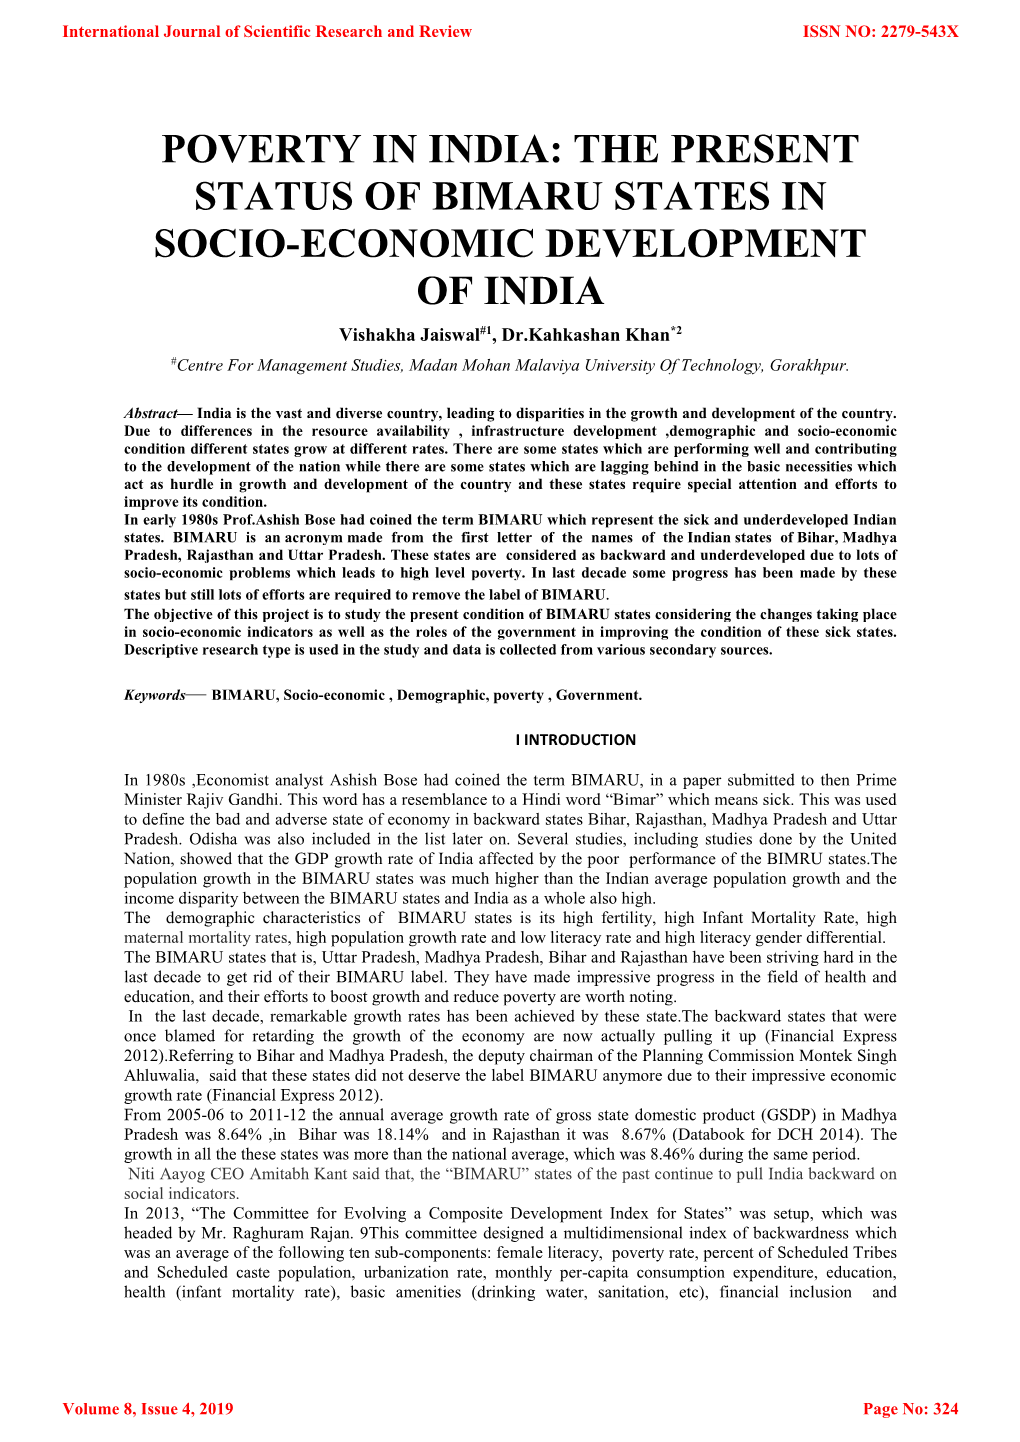 Poverty in India: the Present Status of Bimaru States in Socio-Economic